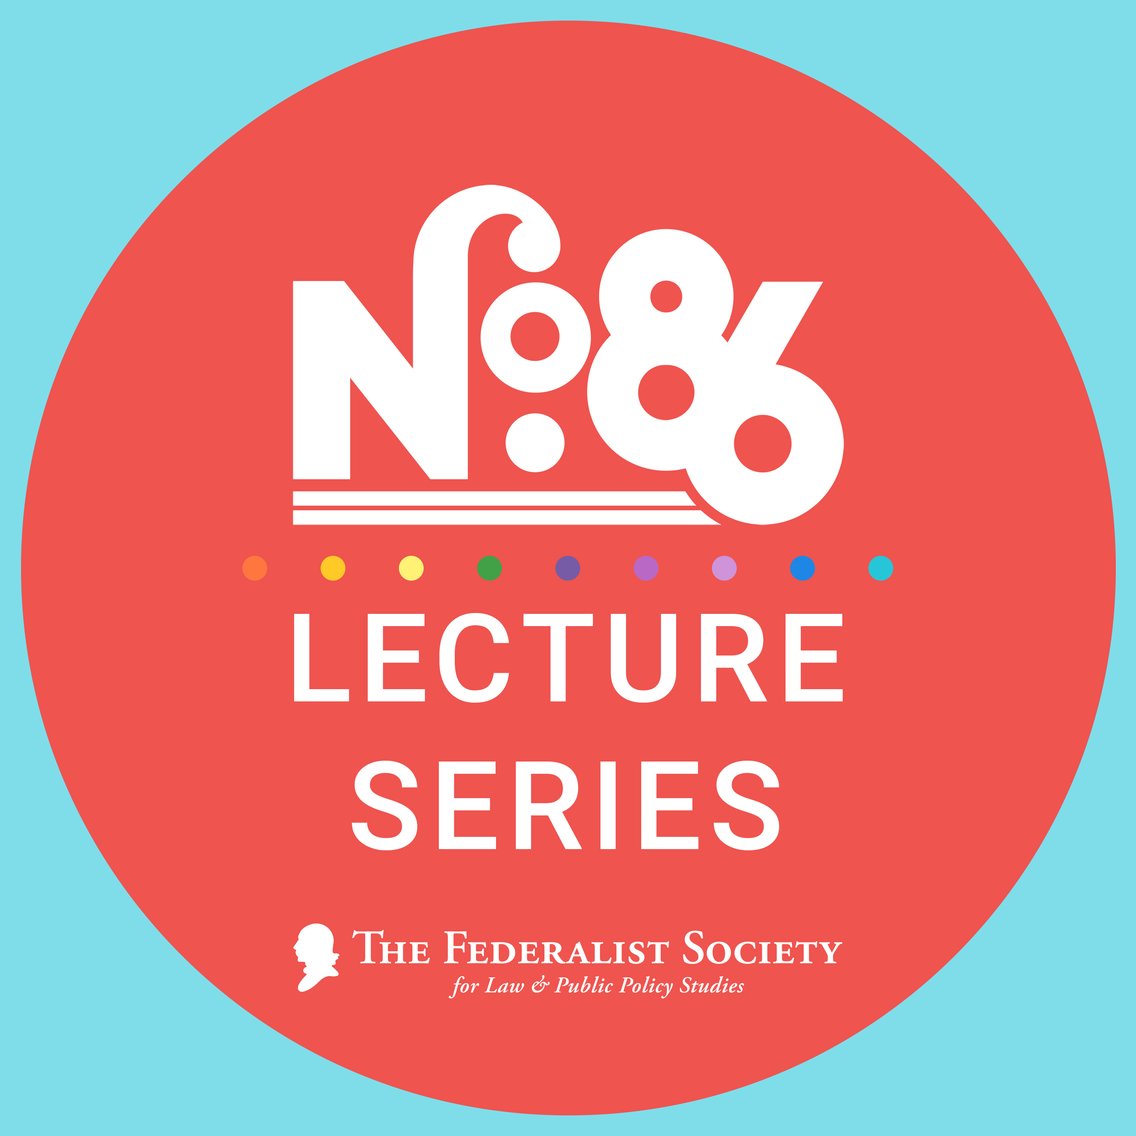 No. 86 Lecture Series - immagine di copertina
